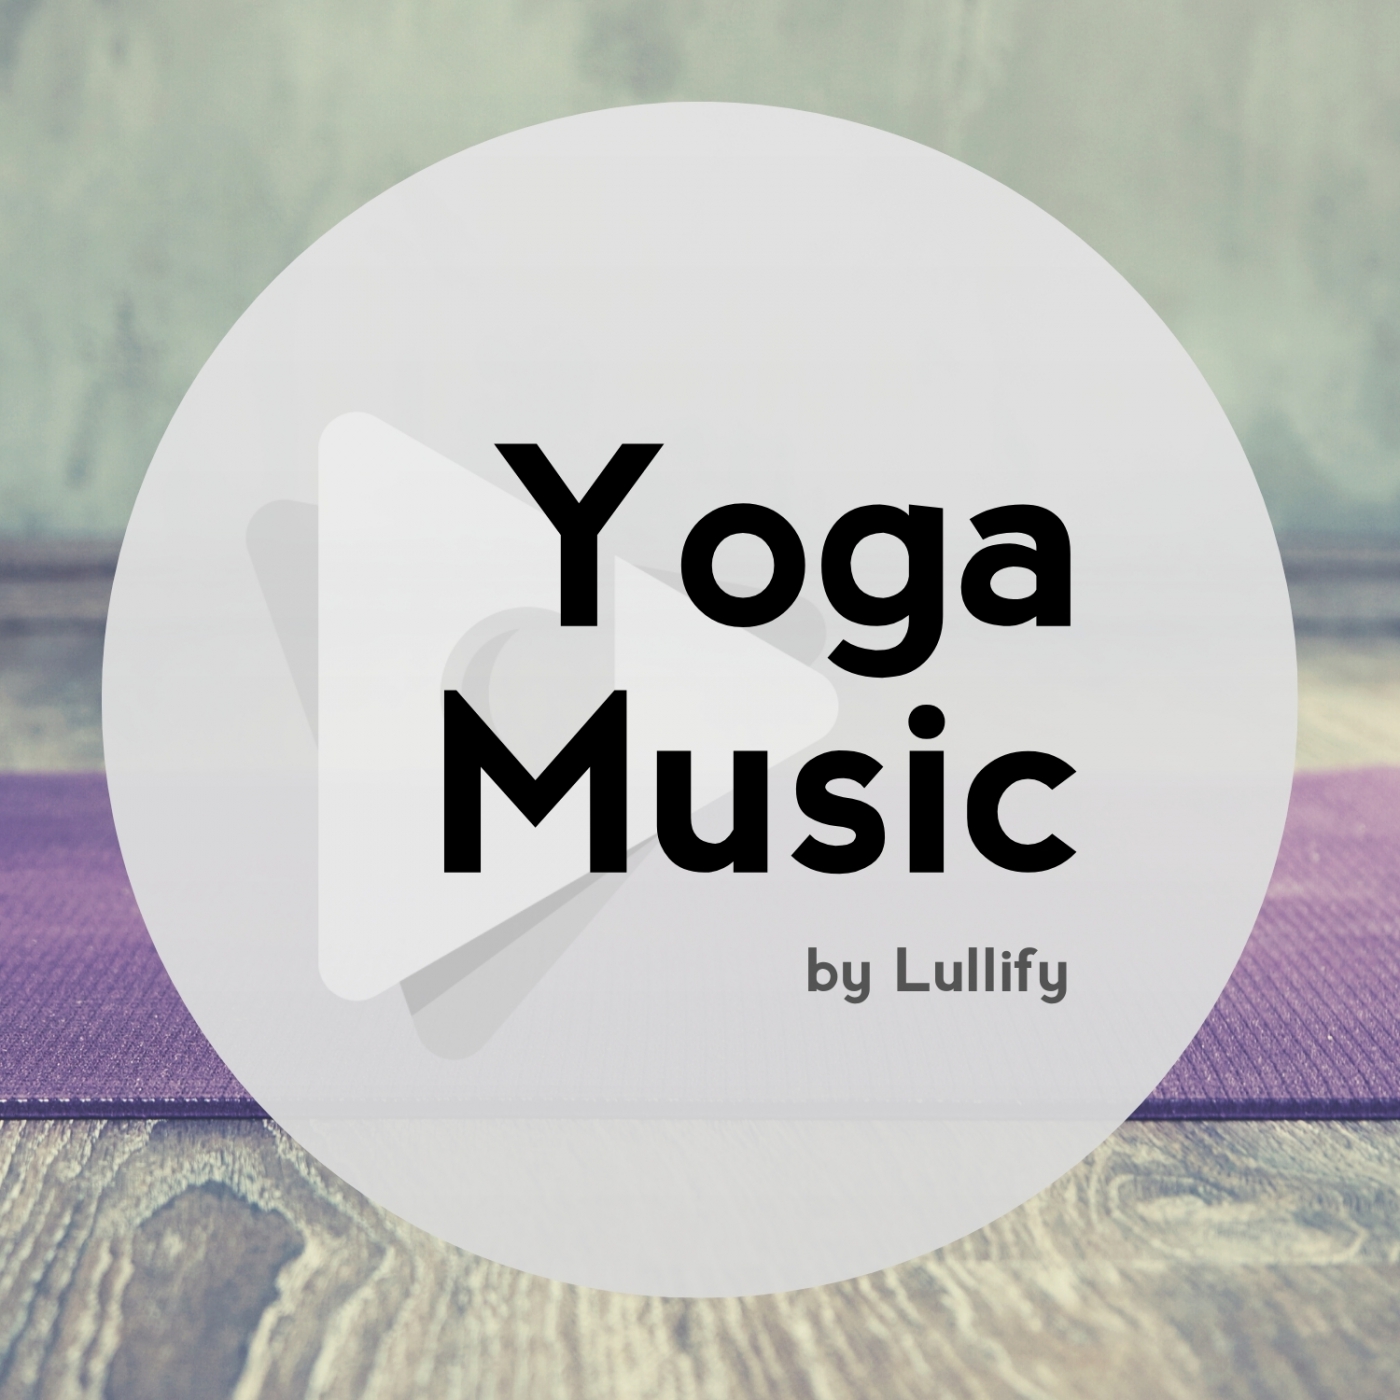 Yoga Music by Lullify